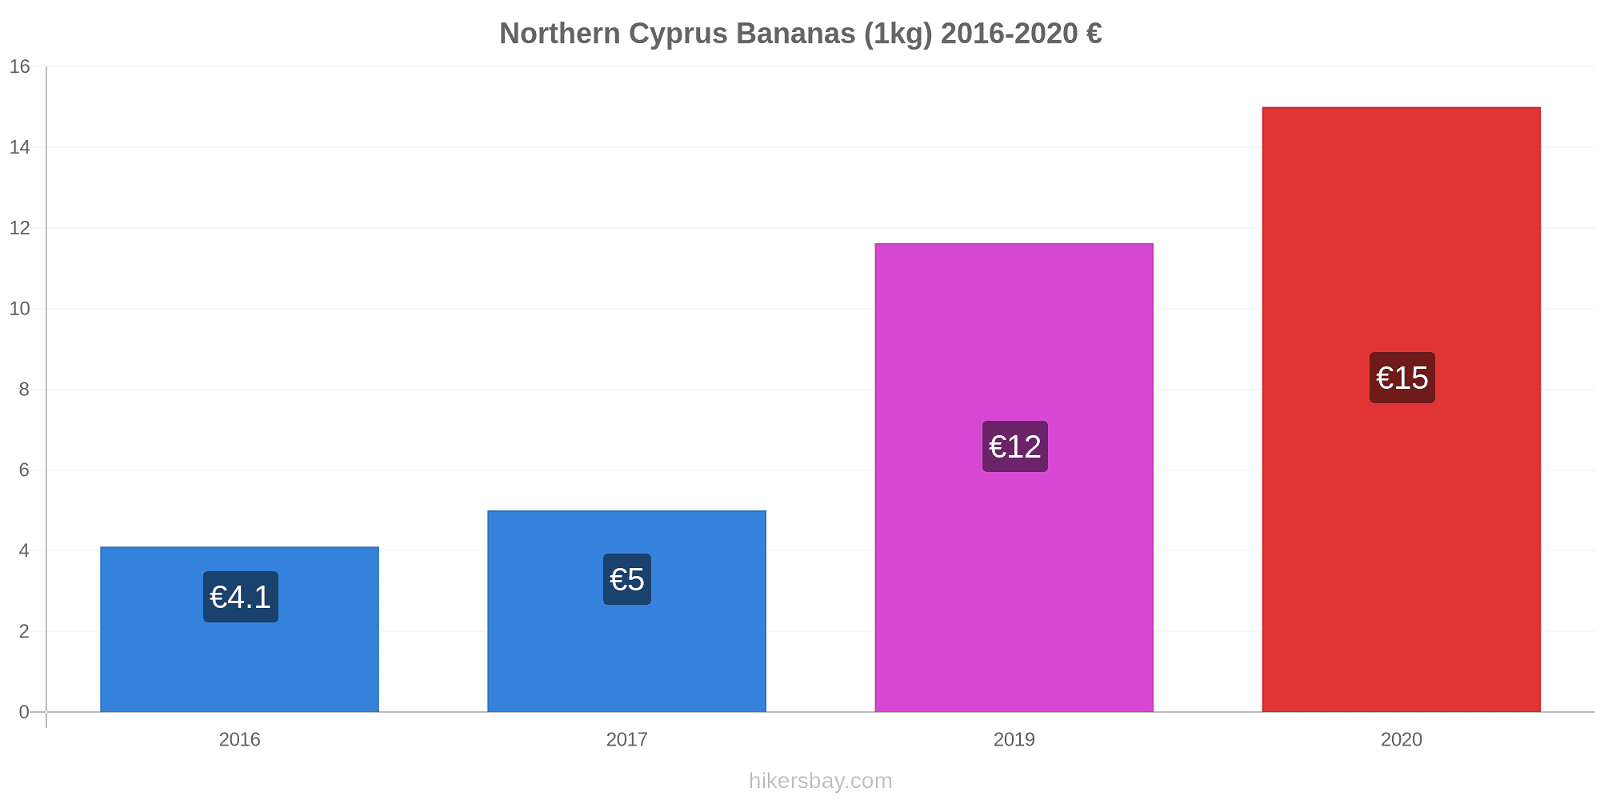 Northern Cyprus price changes Bananas (1kg) hikersbay.com